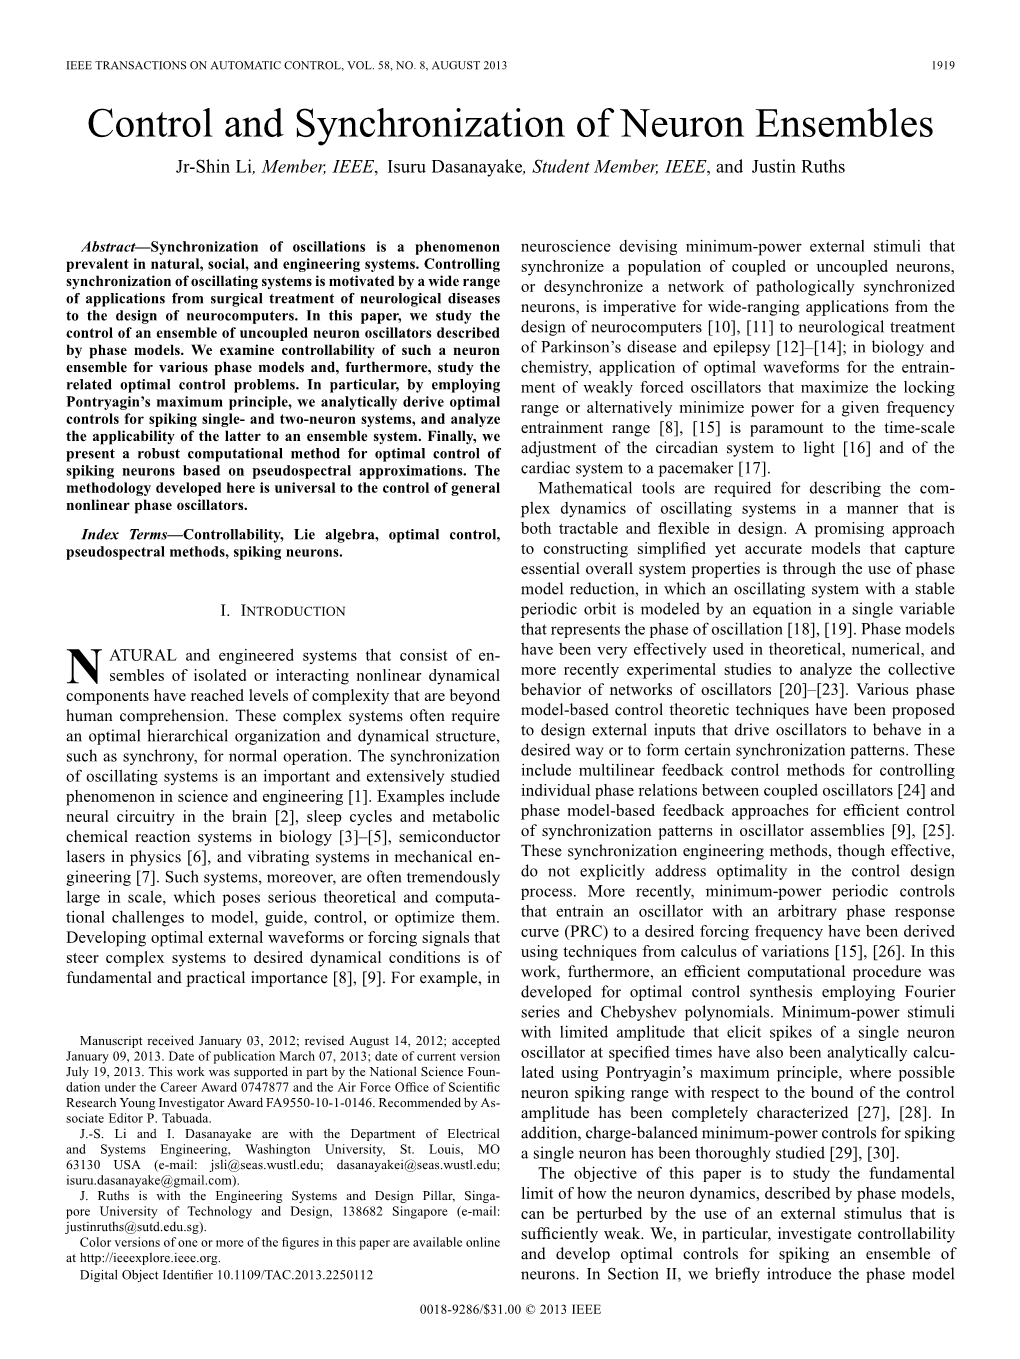 Control and Synchronization of Neuron Ensembles Jr-Shin Li, Member, IEEE, Isuru Dasanayake, Student Member, IEEE, and Justin Ruths